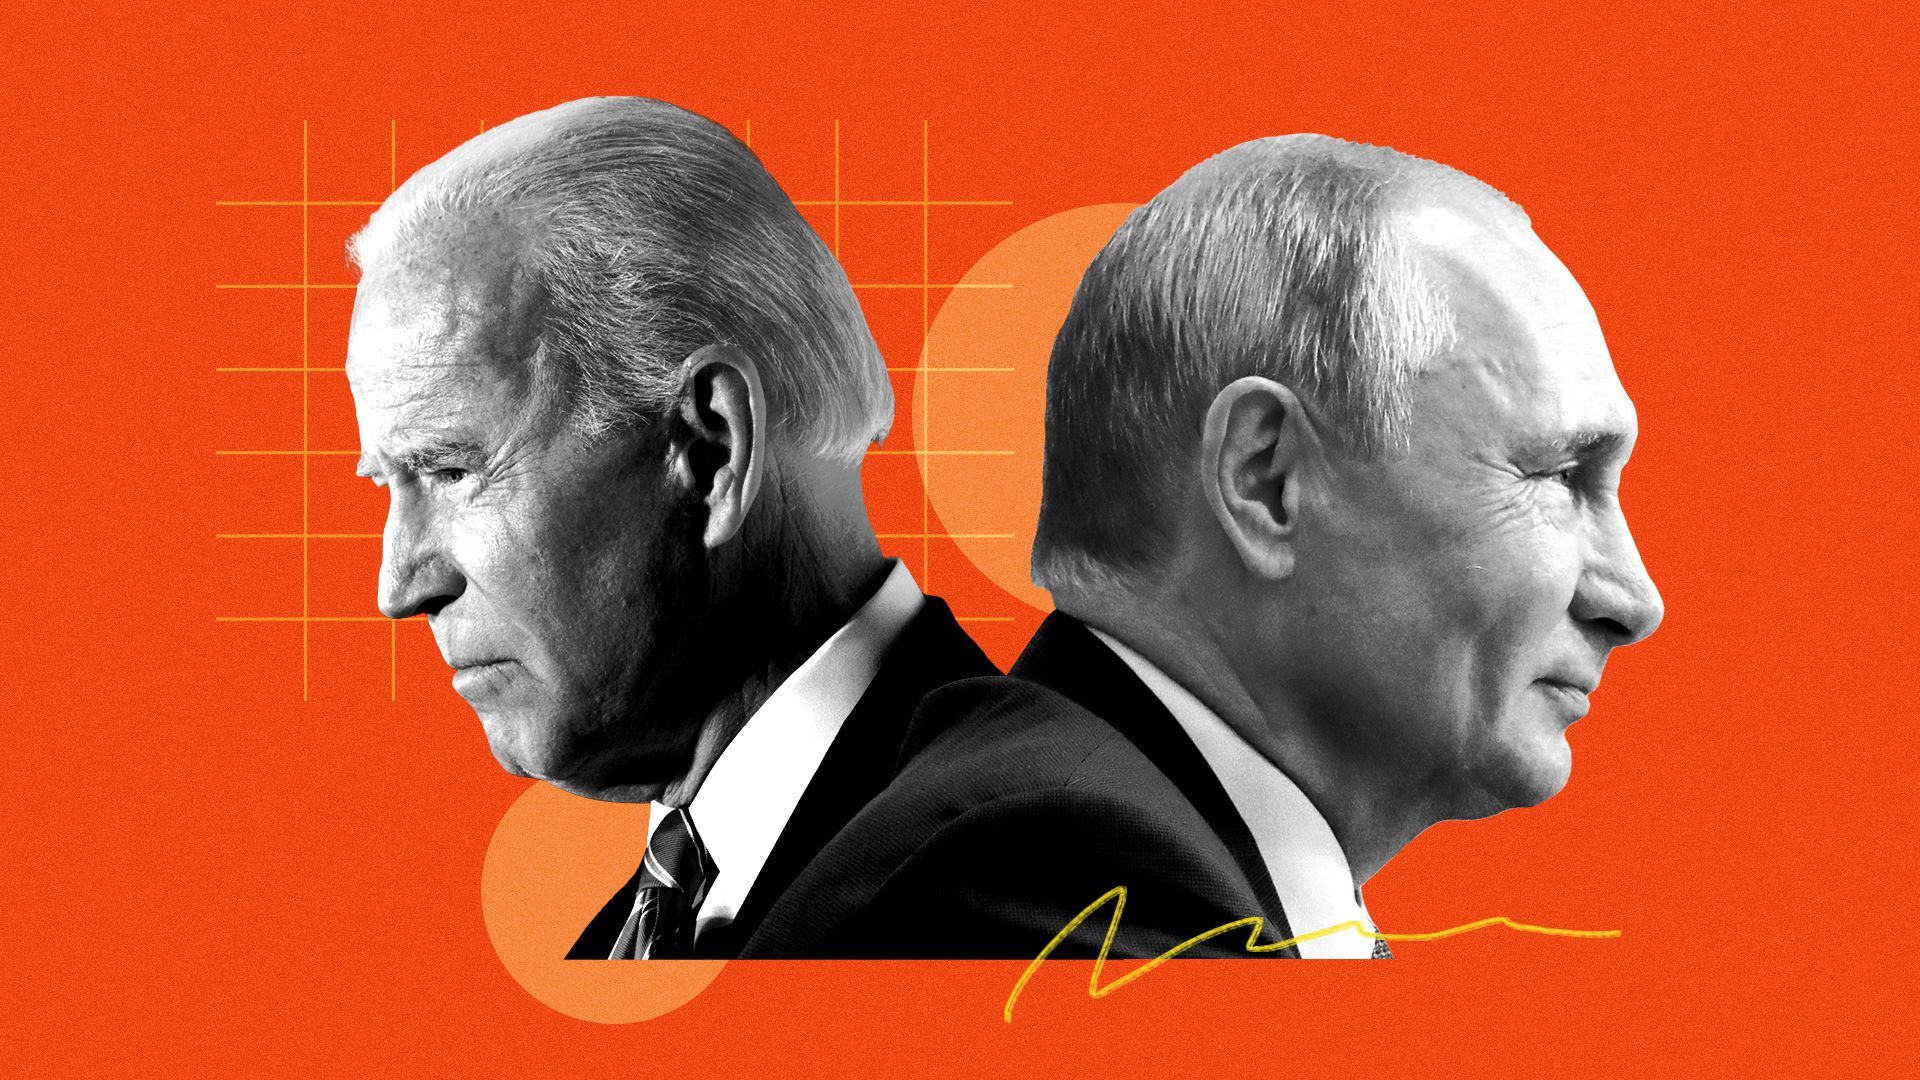 Photo illustrations of Presidents Biden and Vladimir Putin in profile